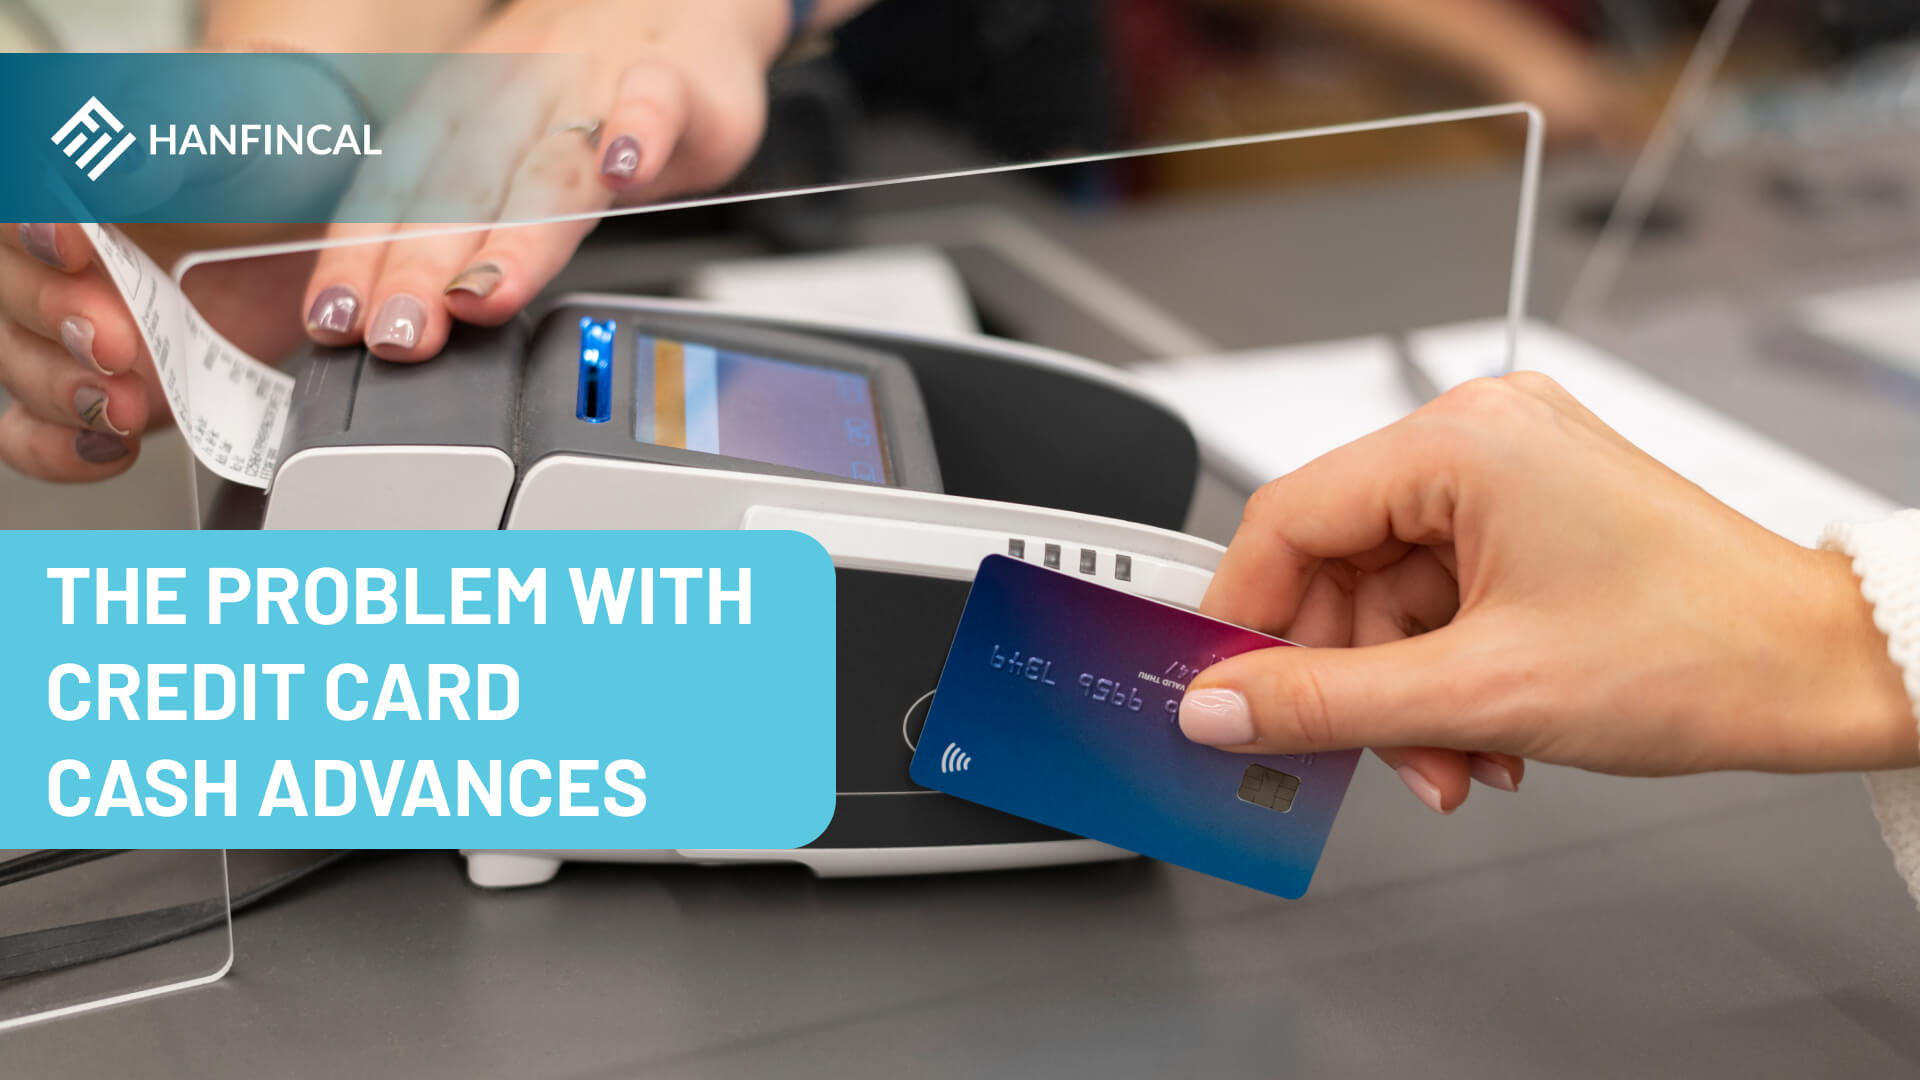 The problem with credit card cash advances